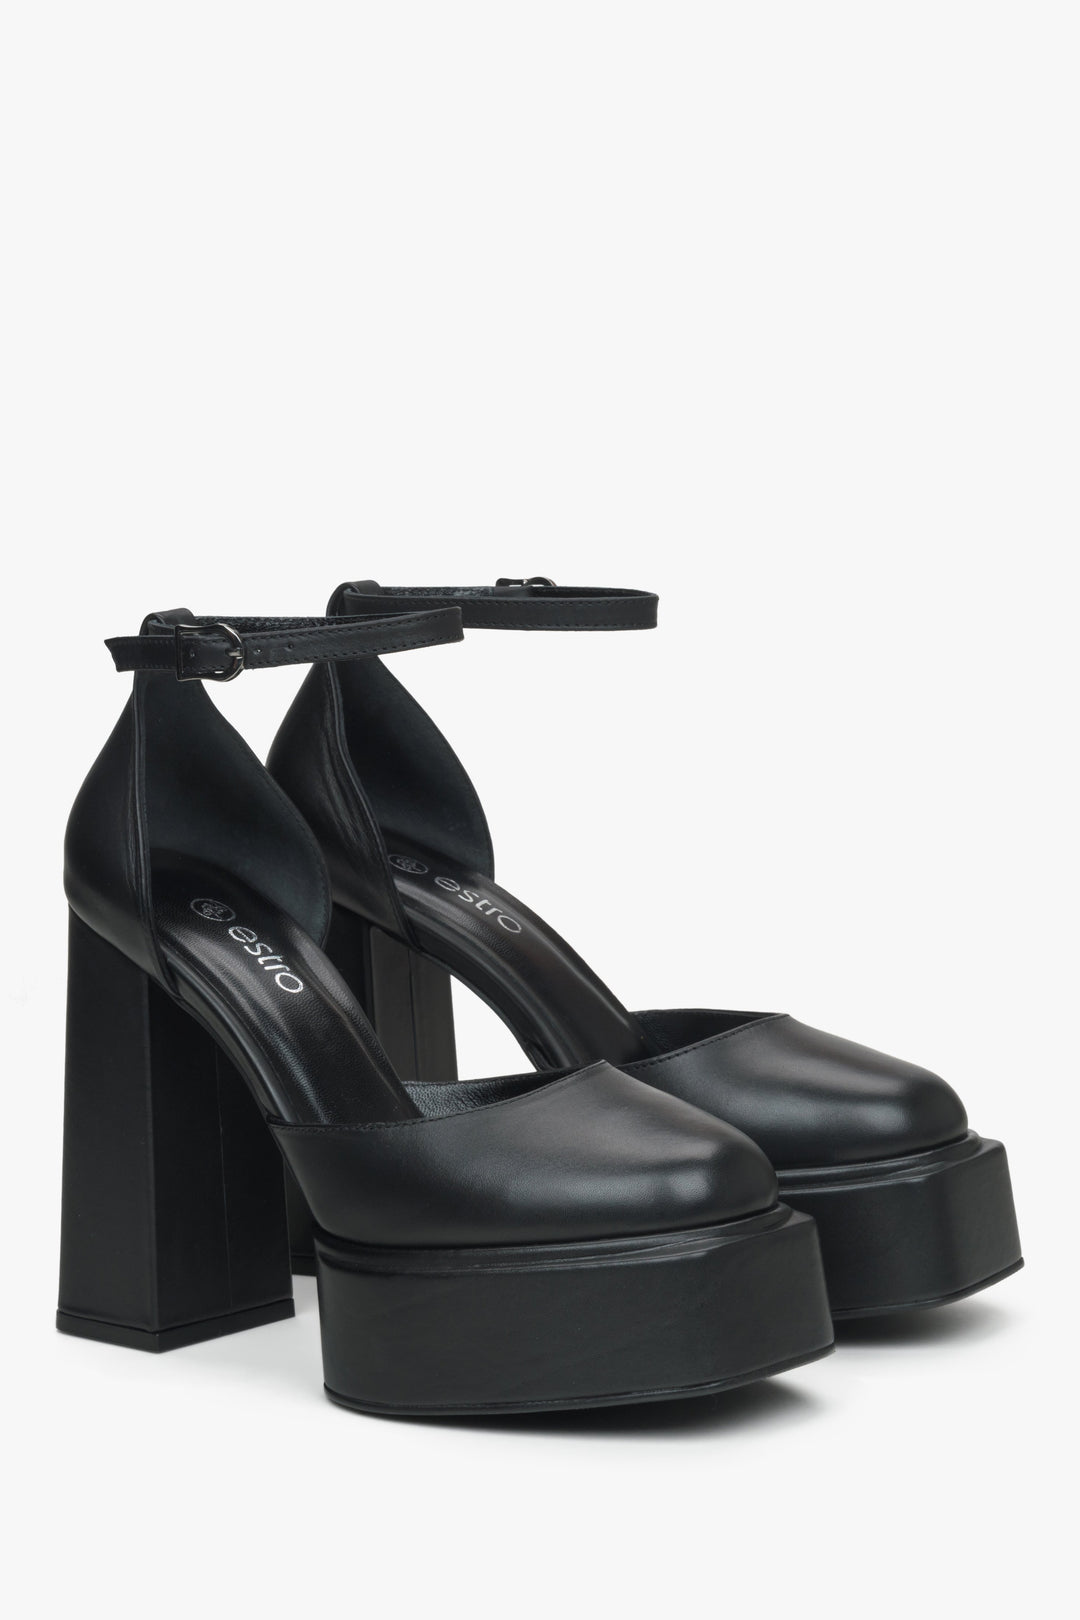 Women's black leather platform sandals.